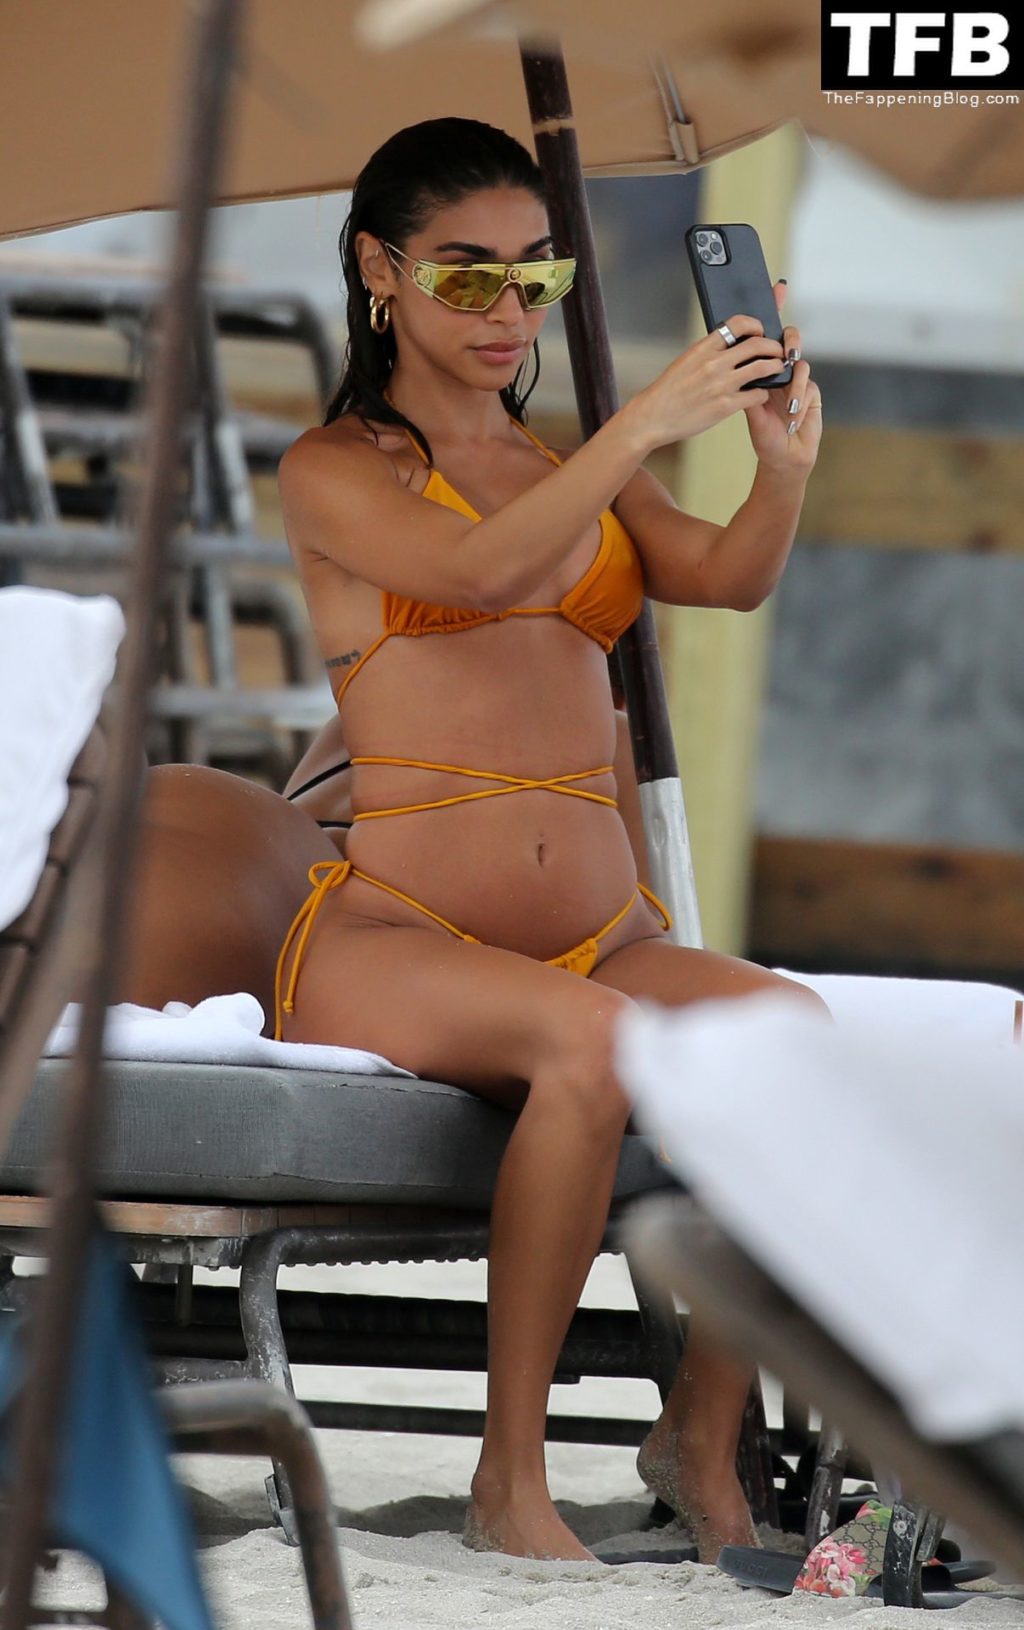 Chantel Jeffries Shows Off Her Beach Body in an Orange Bikini in Miami (46 Photos)